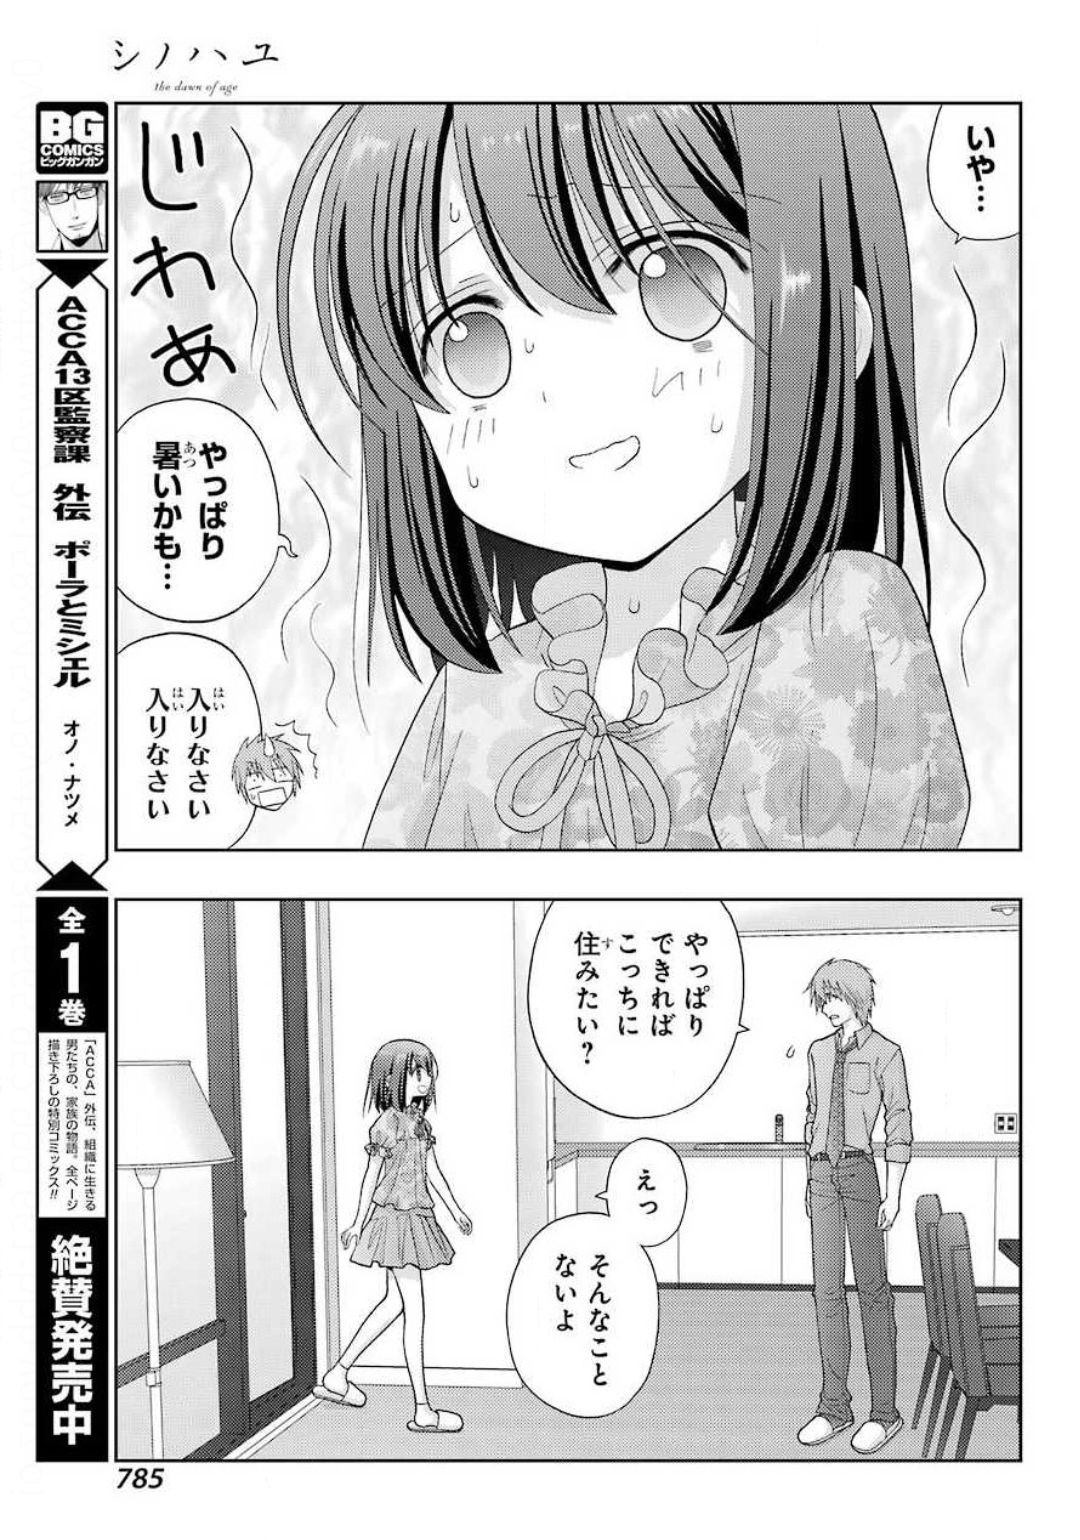 Shinohayu - The Dawn of Age Manga - Chapter 083 - Page 3